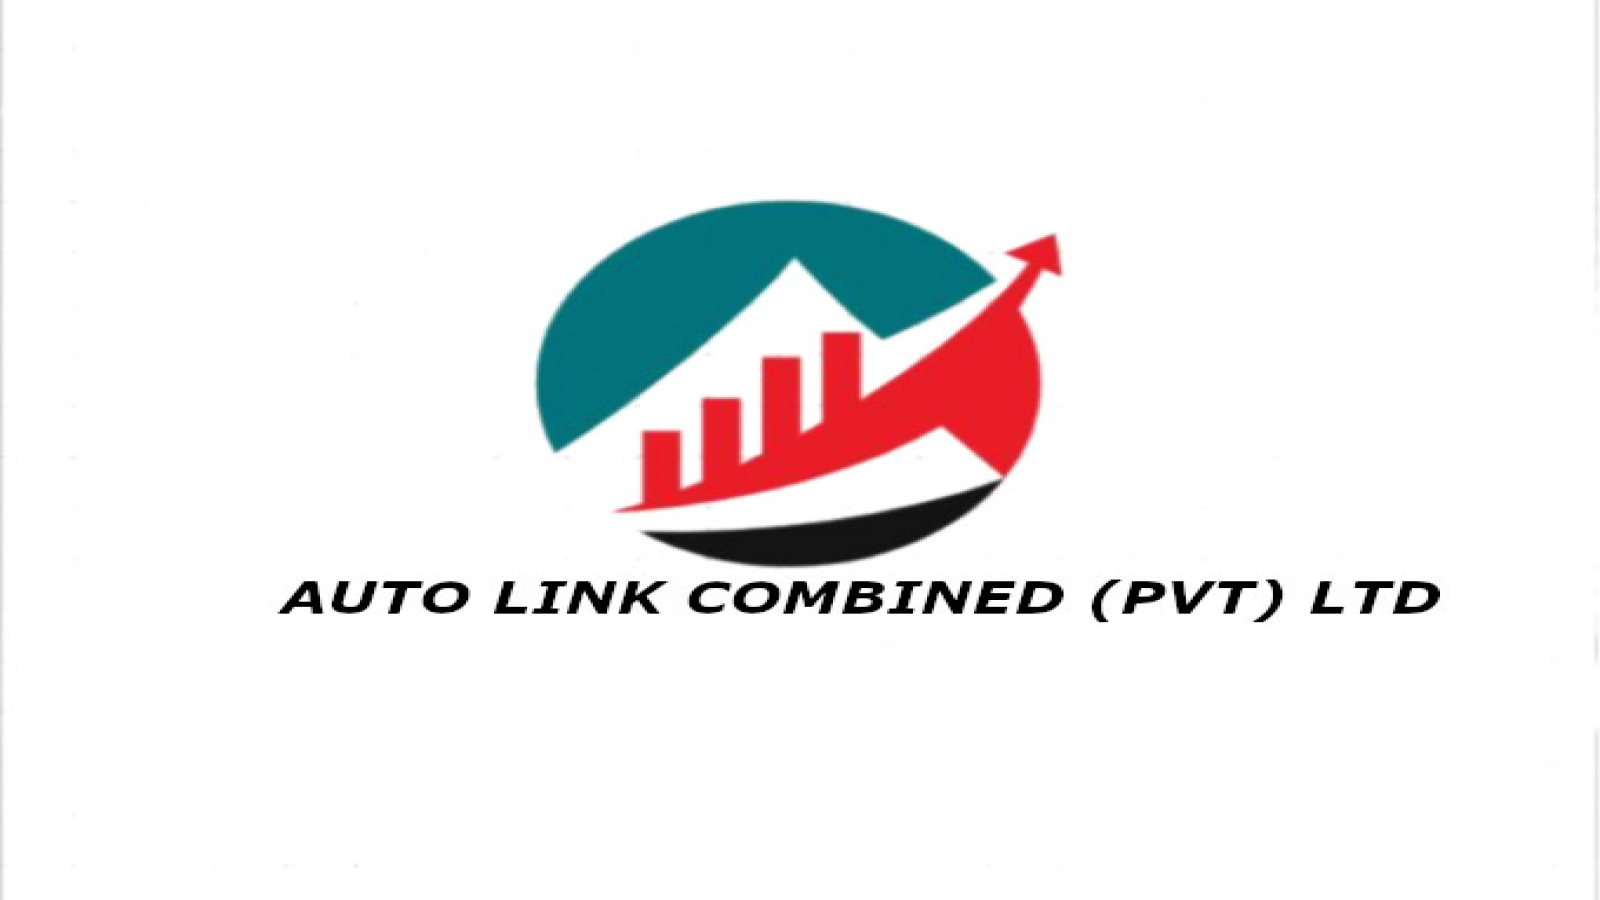 AUTO LINK COMBINED PVT LTD